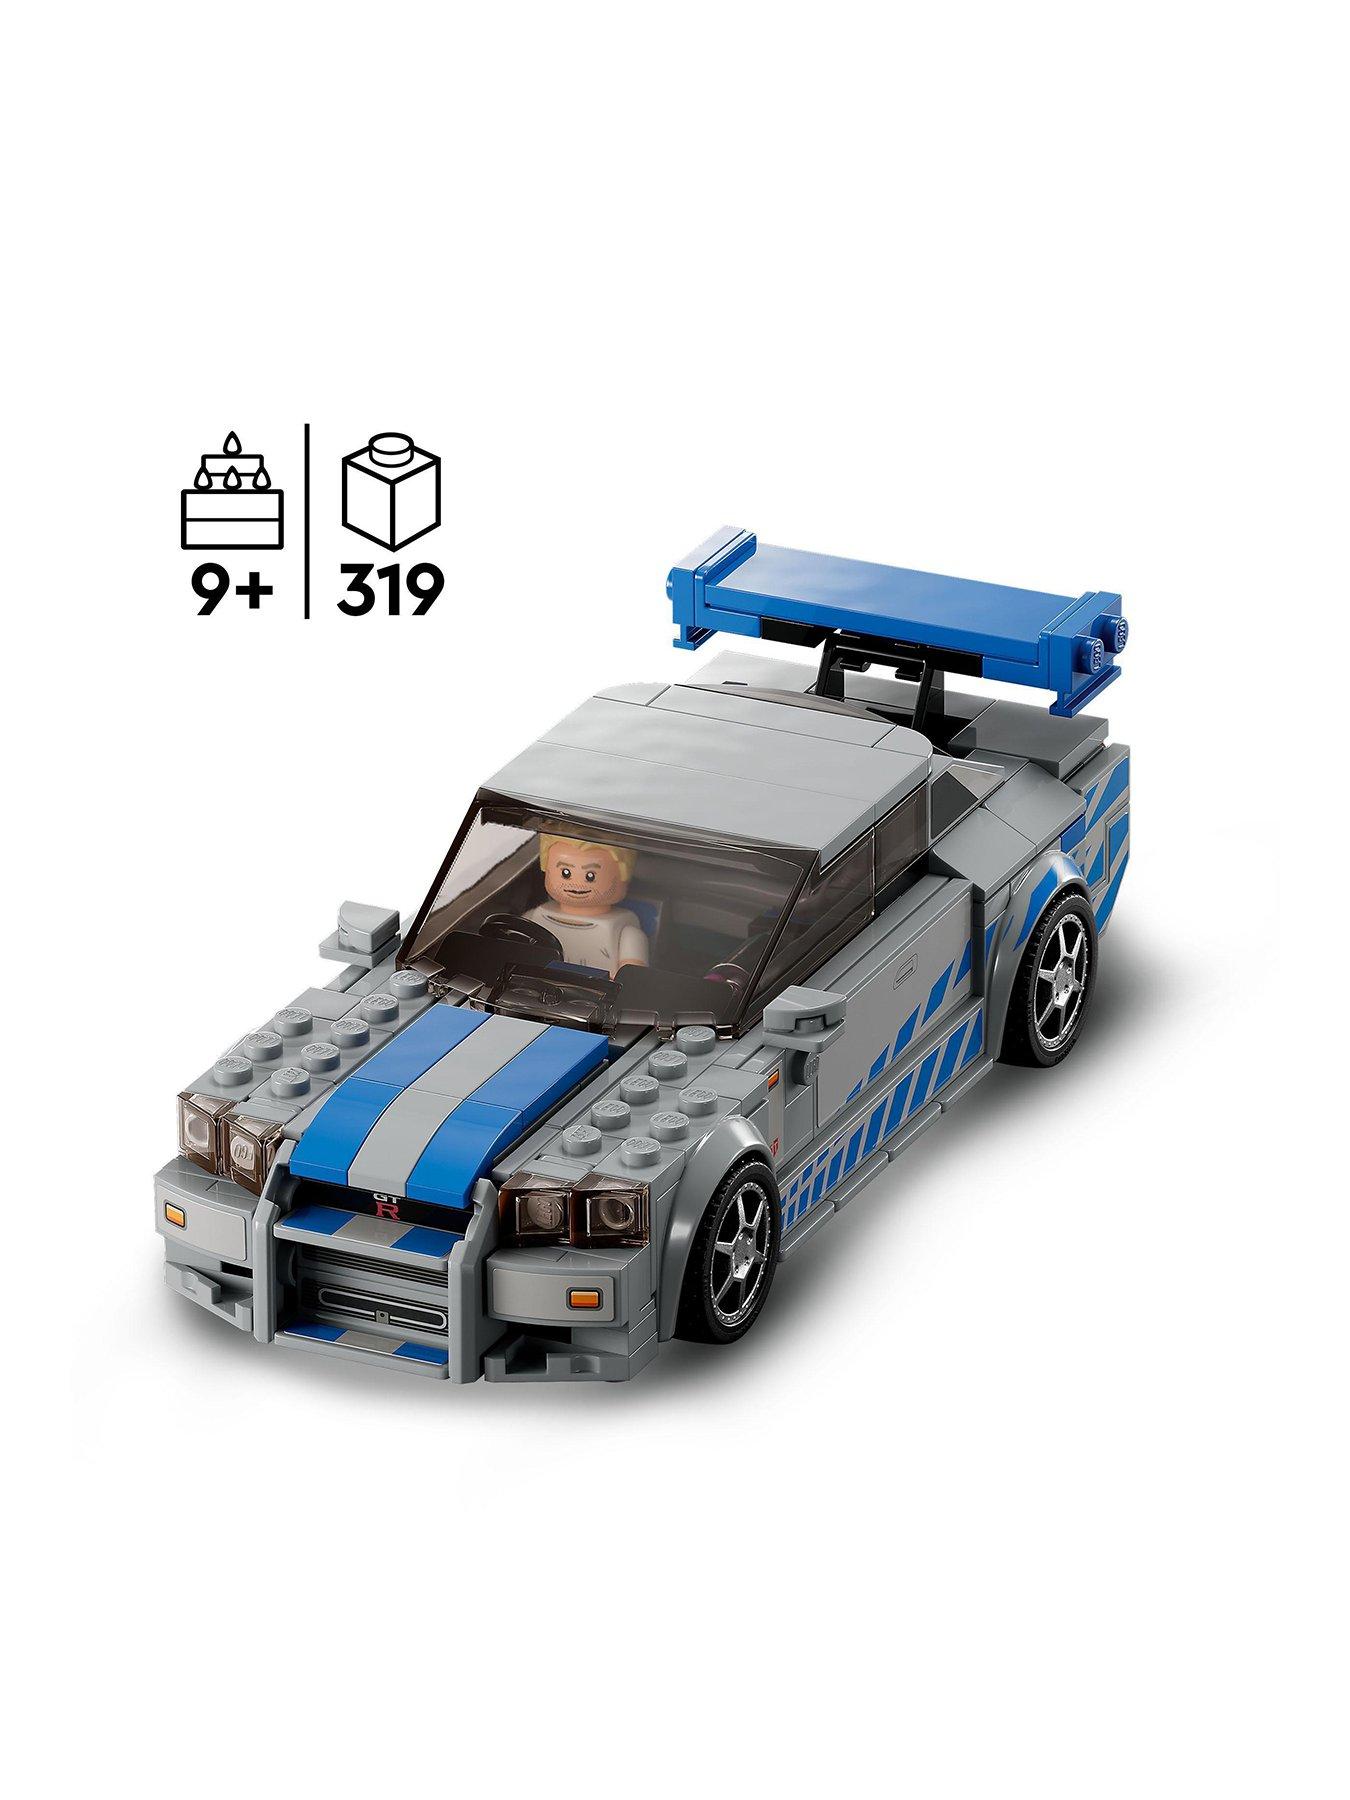 LEGO Speed Champions 76917 2 Fast 2 Furious – Nissan Skyline GT-R